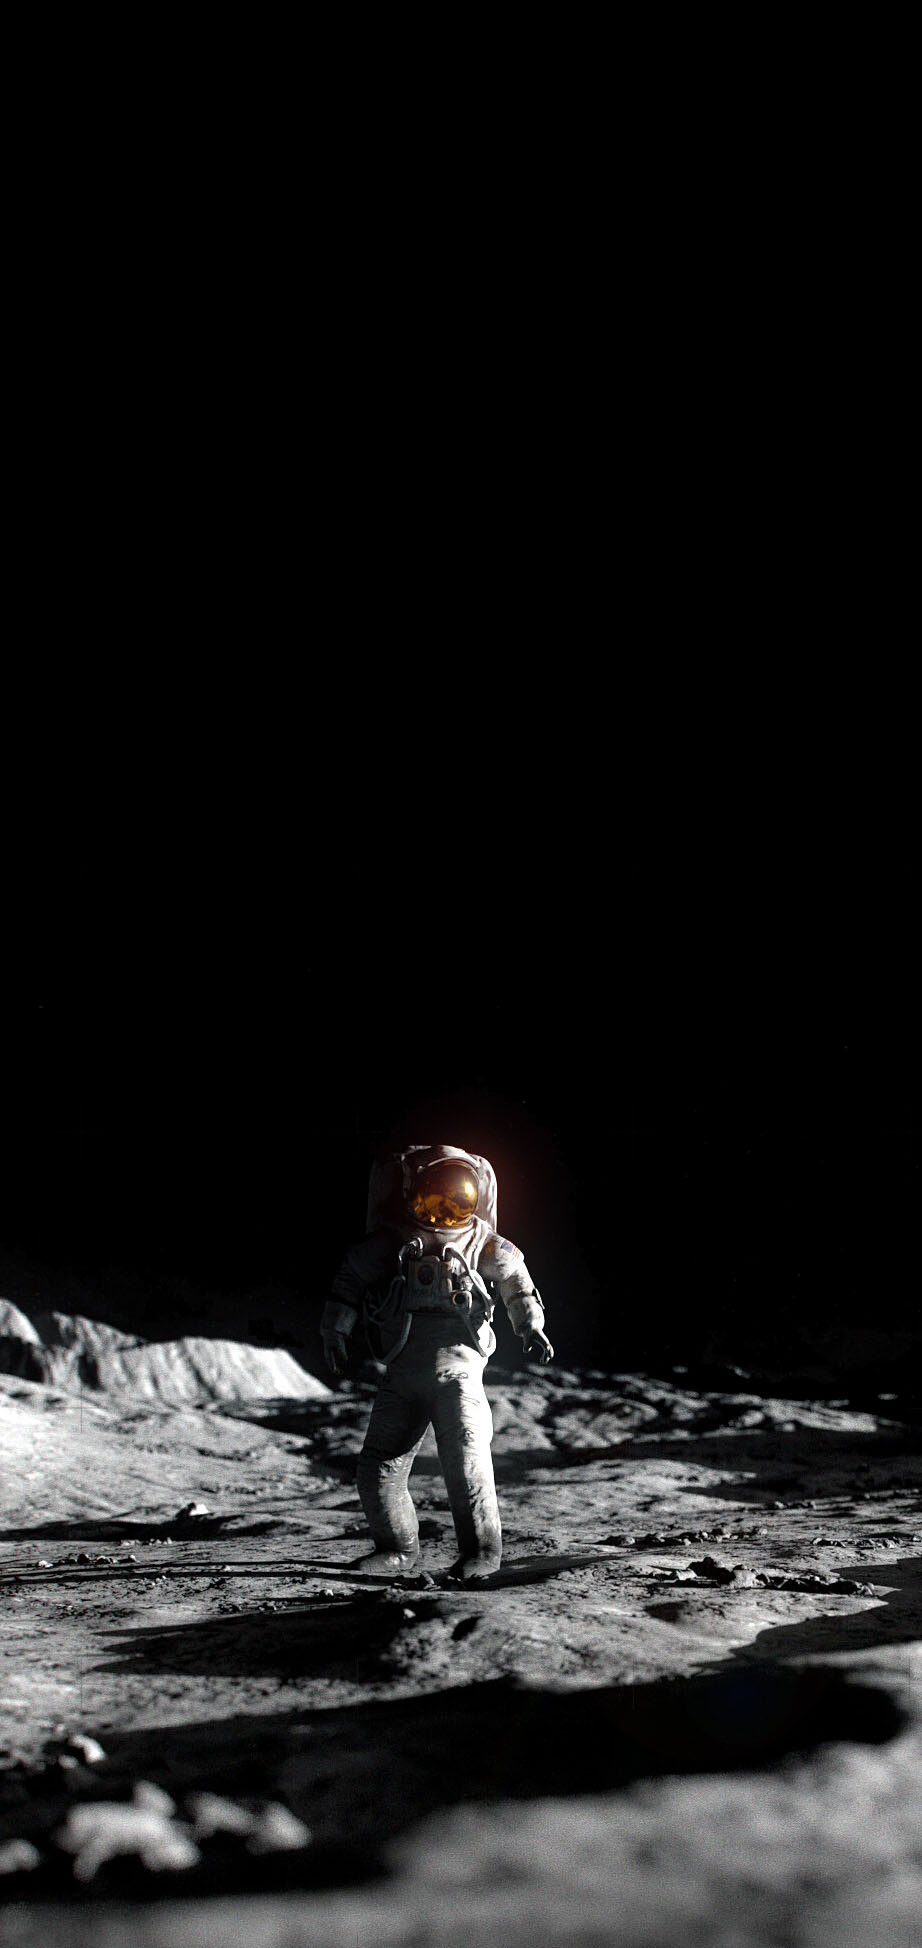 Amoled wallpaper - Astronaut in the moon